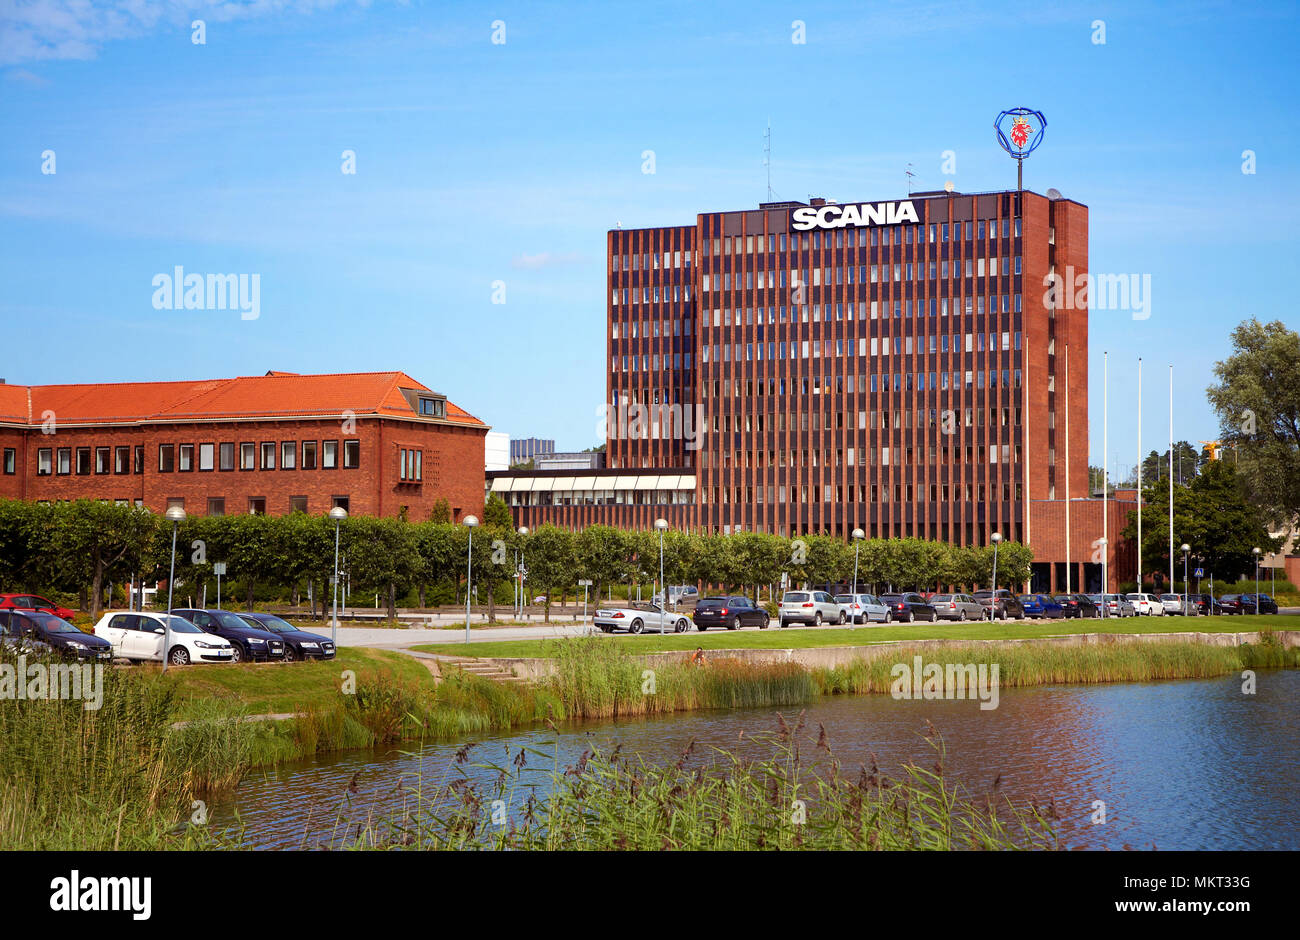 SCANIA truck manufacturer headquartered in Sodertalje, Sweden. Stock Photo